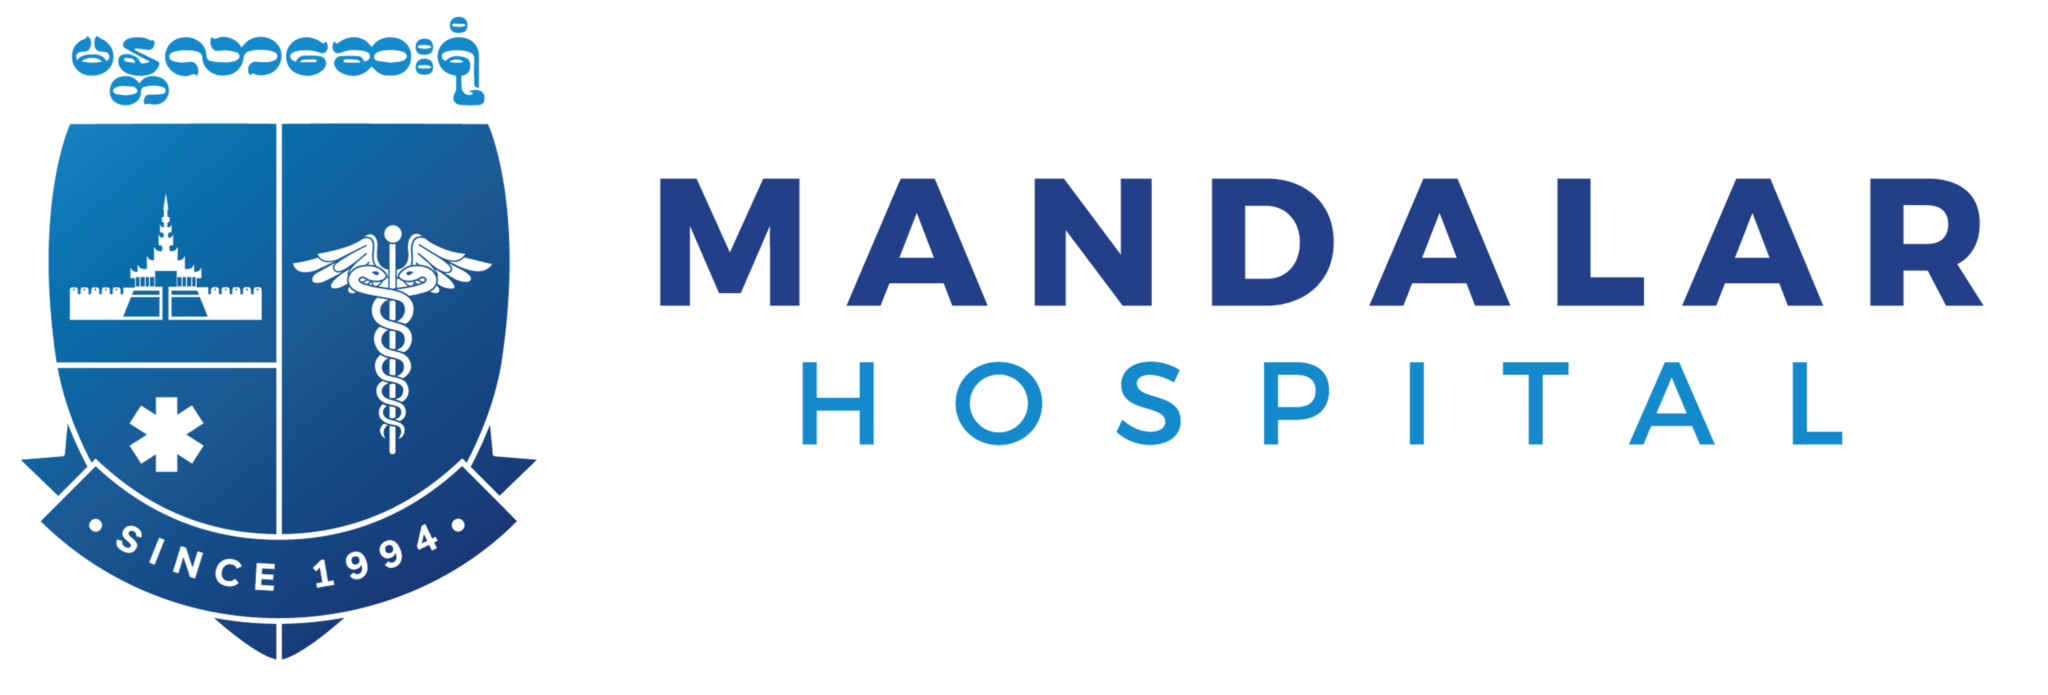 About Us | Mandalar Hospital (မန္တလာဆေးရုံ), Mandalay